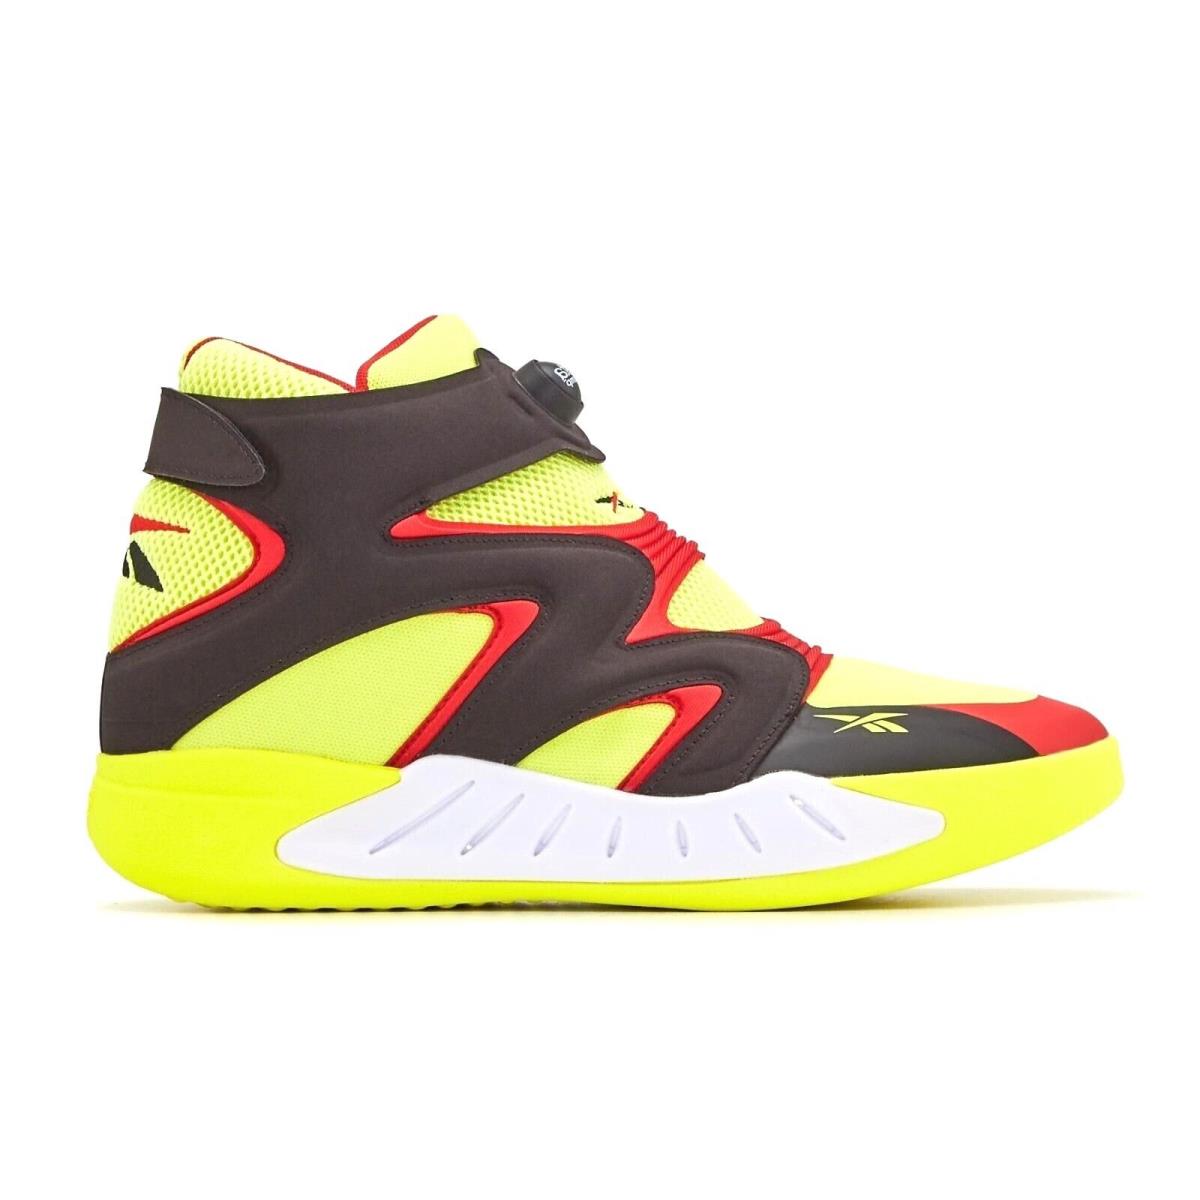 Reebok Men`s Instapump Fury Zone Shoes Acid Yellow G55142 g - Acid Yellow